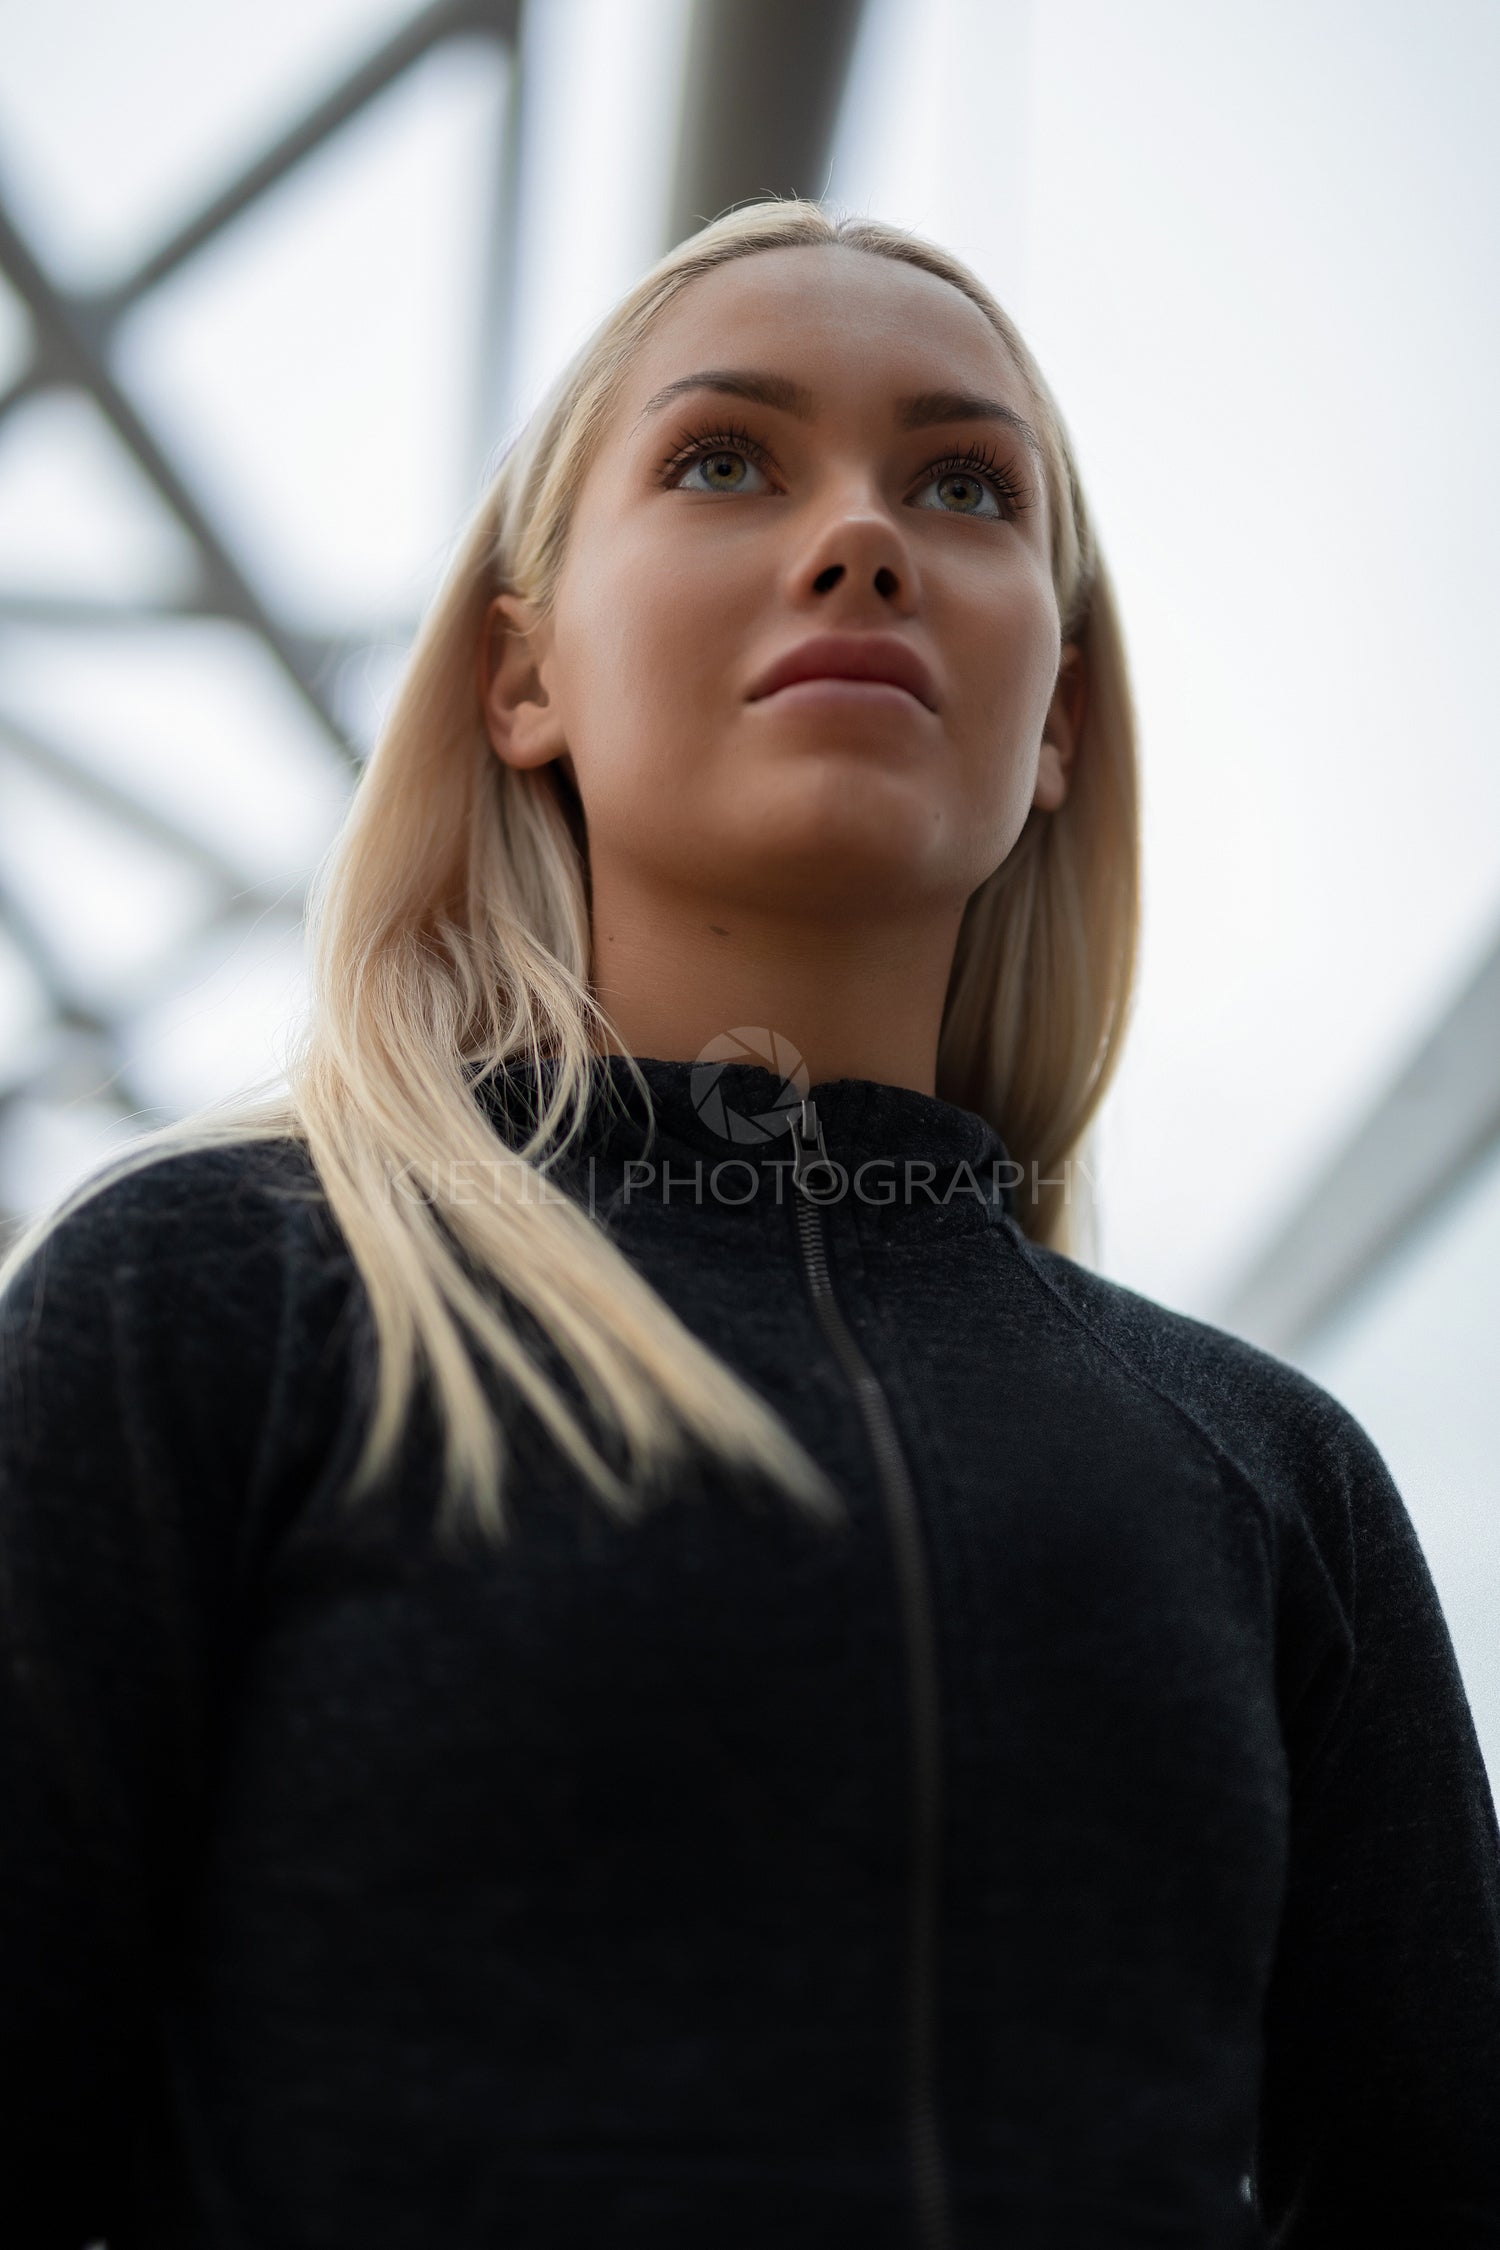 Urban scandinavian woman in workout outfit standing on a bridge